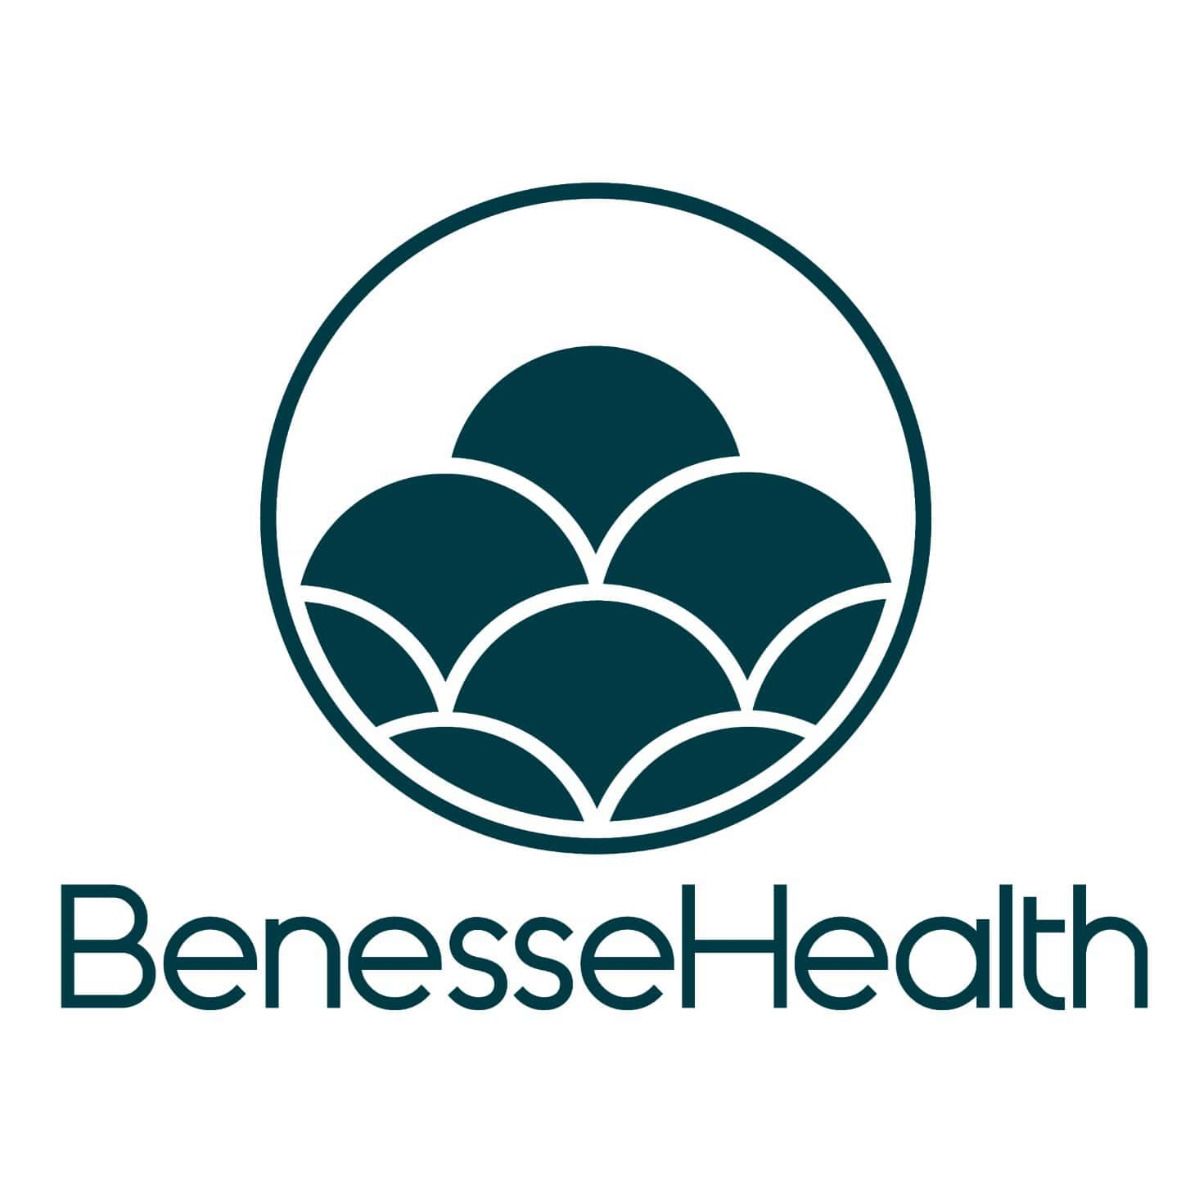 Benesse Health